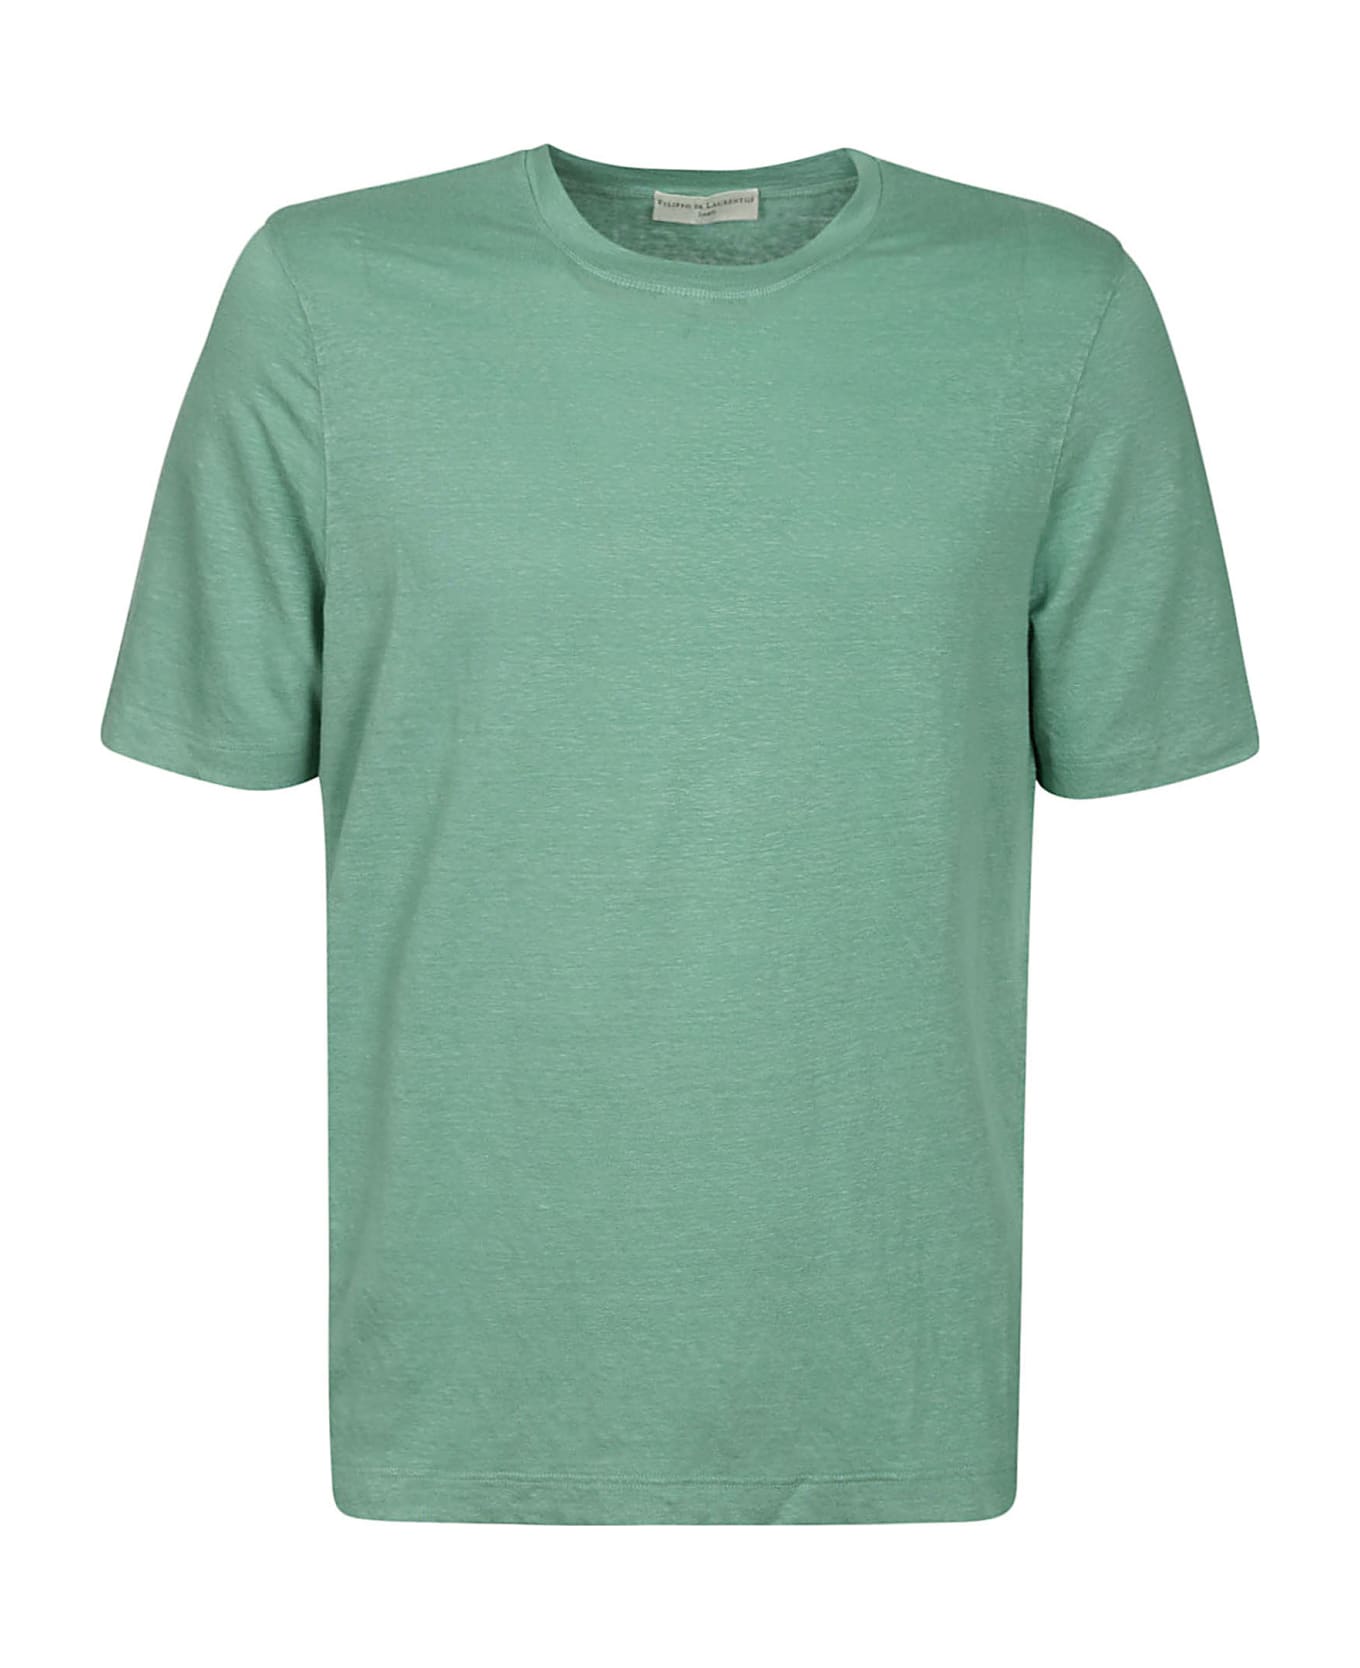 Filippo De Laurentiis Tshirt Ss - Emerald